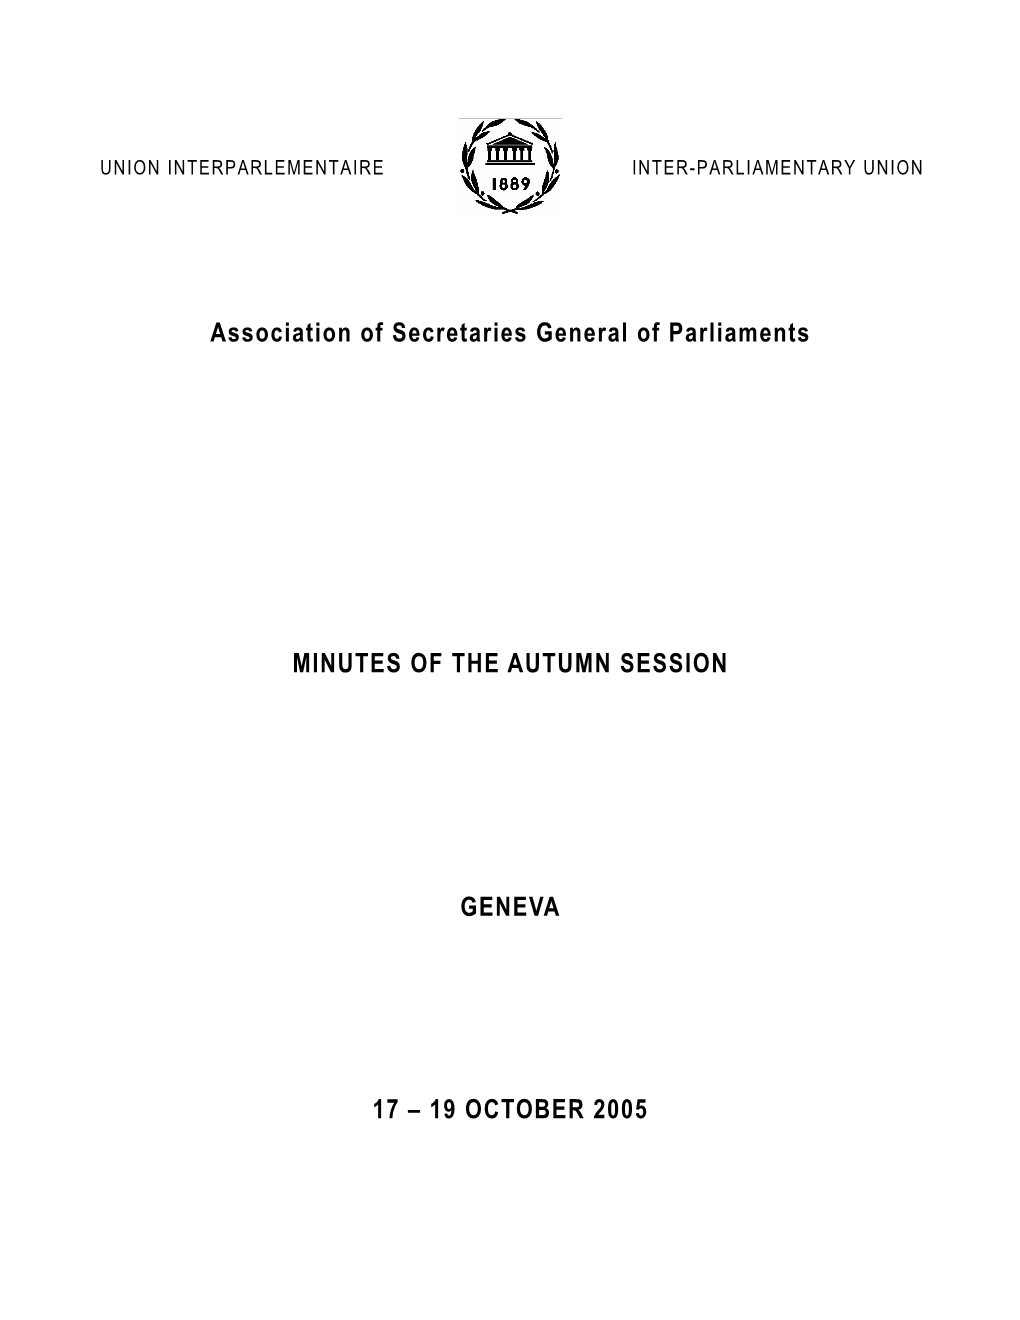 MINUTES of the AUTUMN SESSION, Geneva, 17-19 October